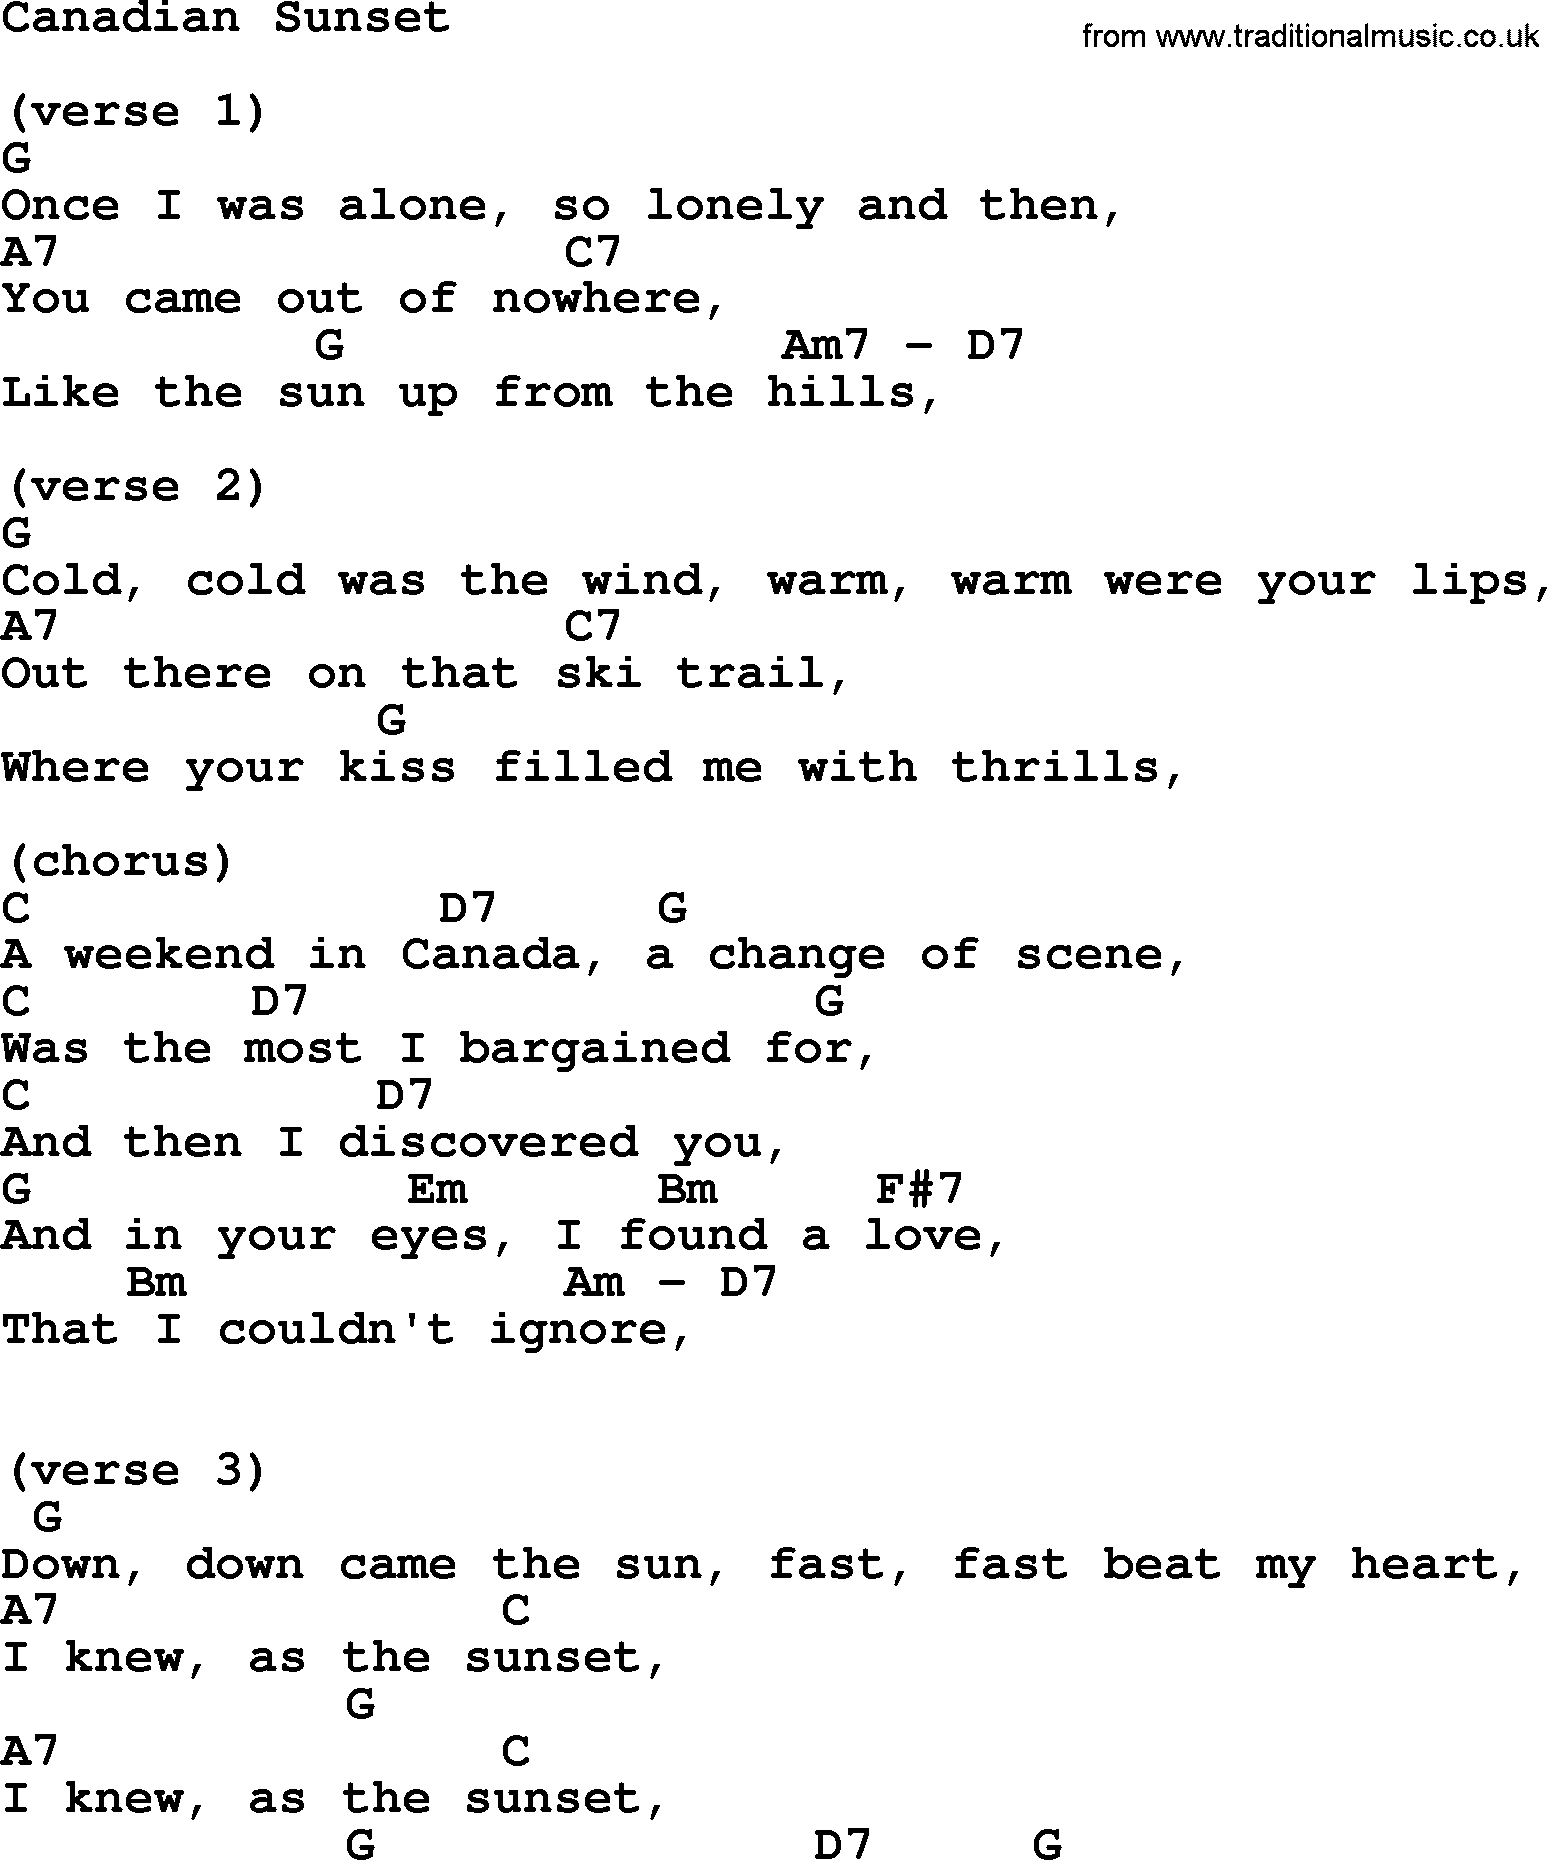 Hank Williams song Canadian Sunset, lyrics and chords